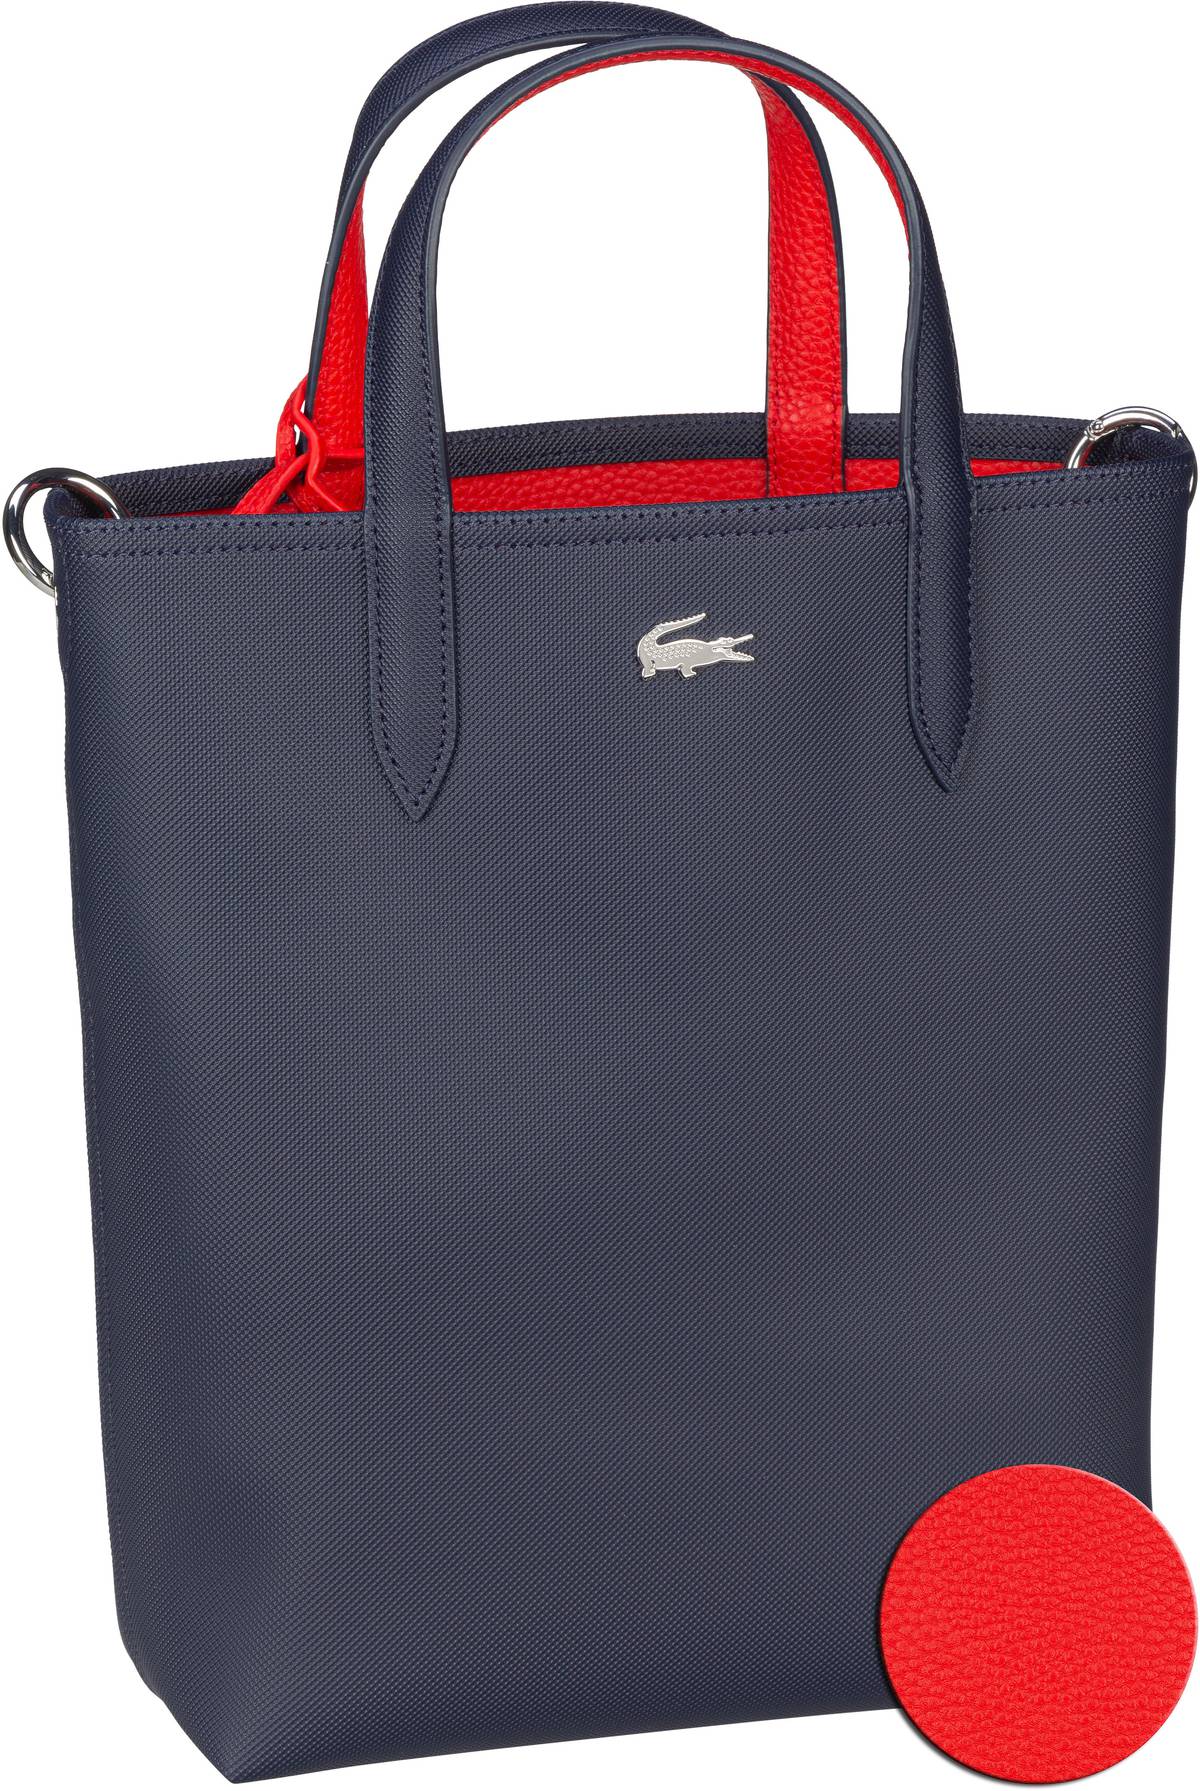 Lacoste Anna Vertical Shopping Bag 2991 - Peacoat/Salsa